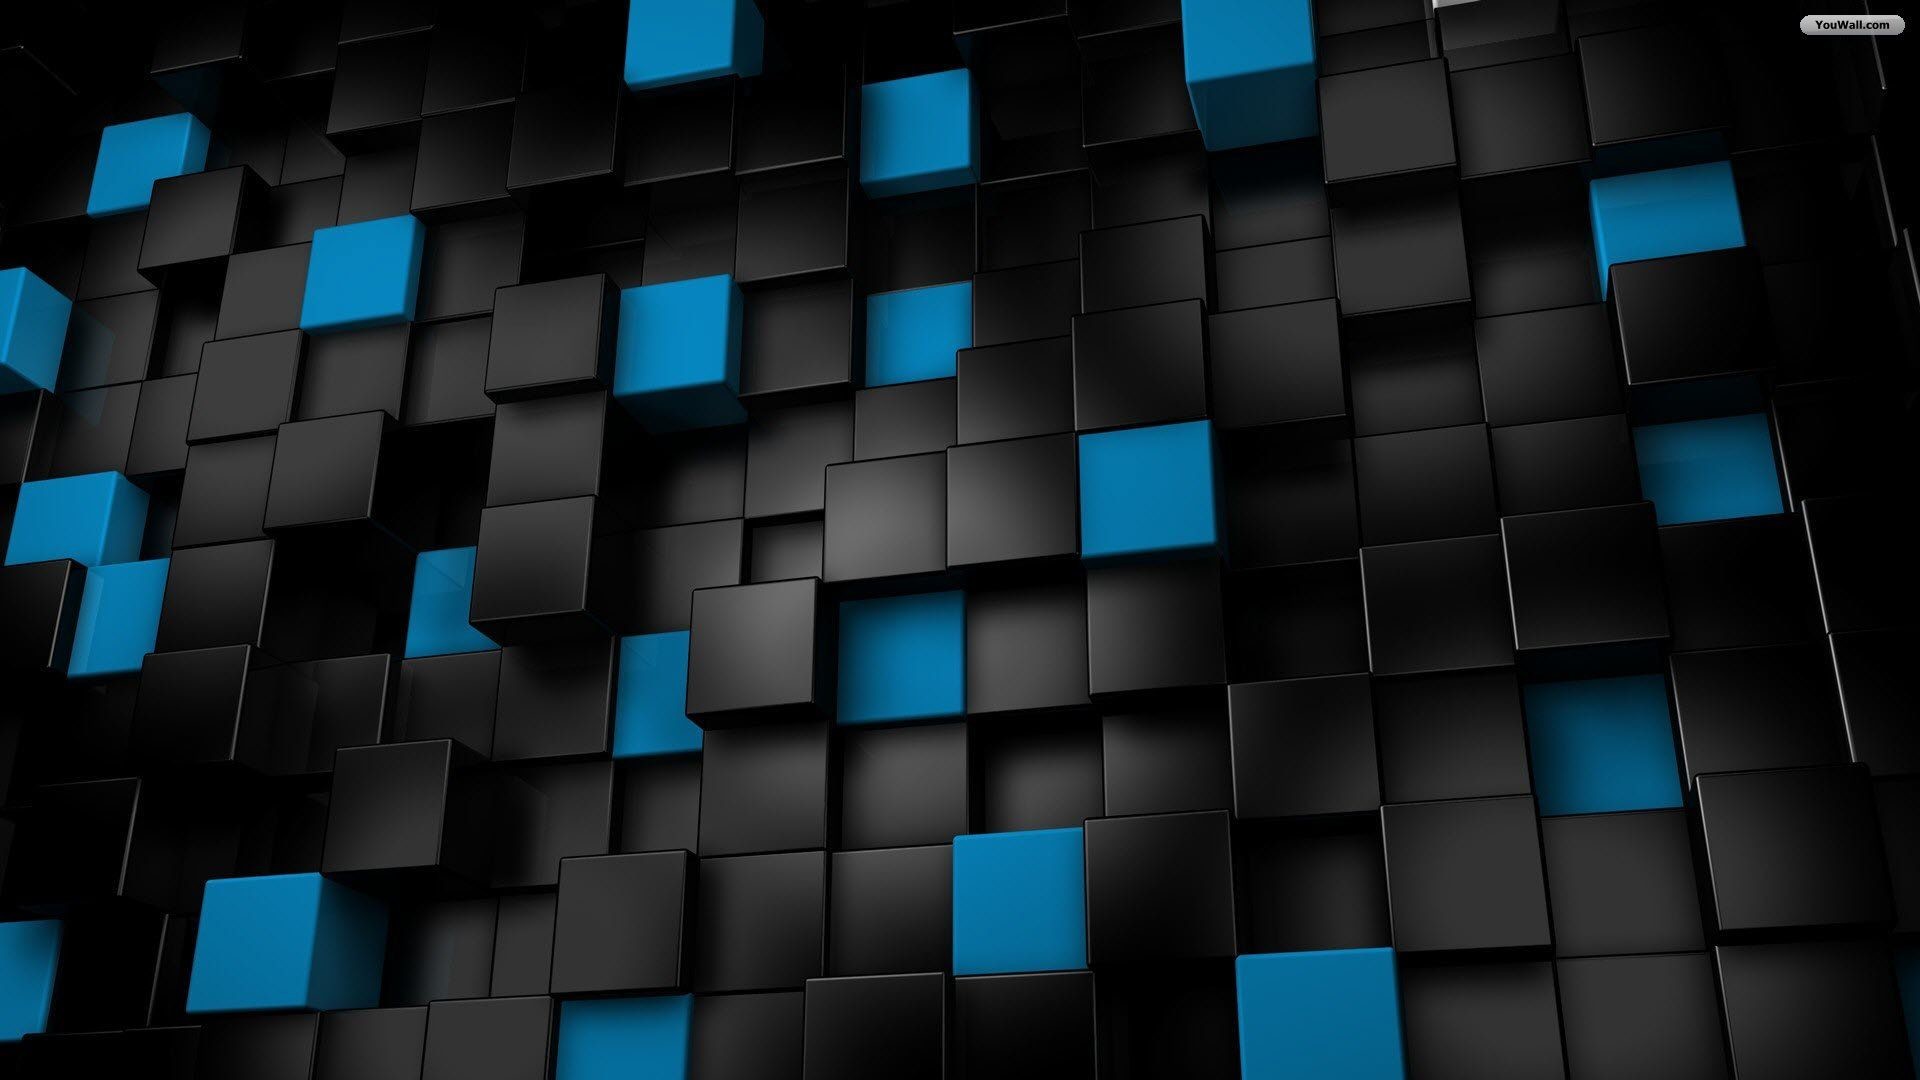 1920x1080 Black And Blue Wallpaper Square Small Elegant Manufacturing Creative  Desktop Background